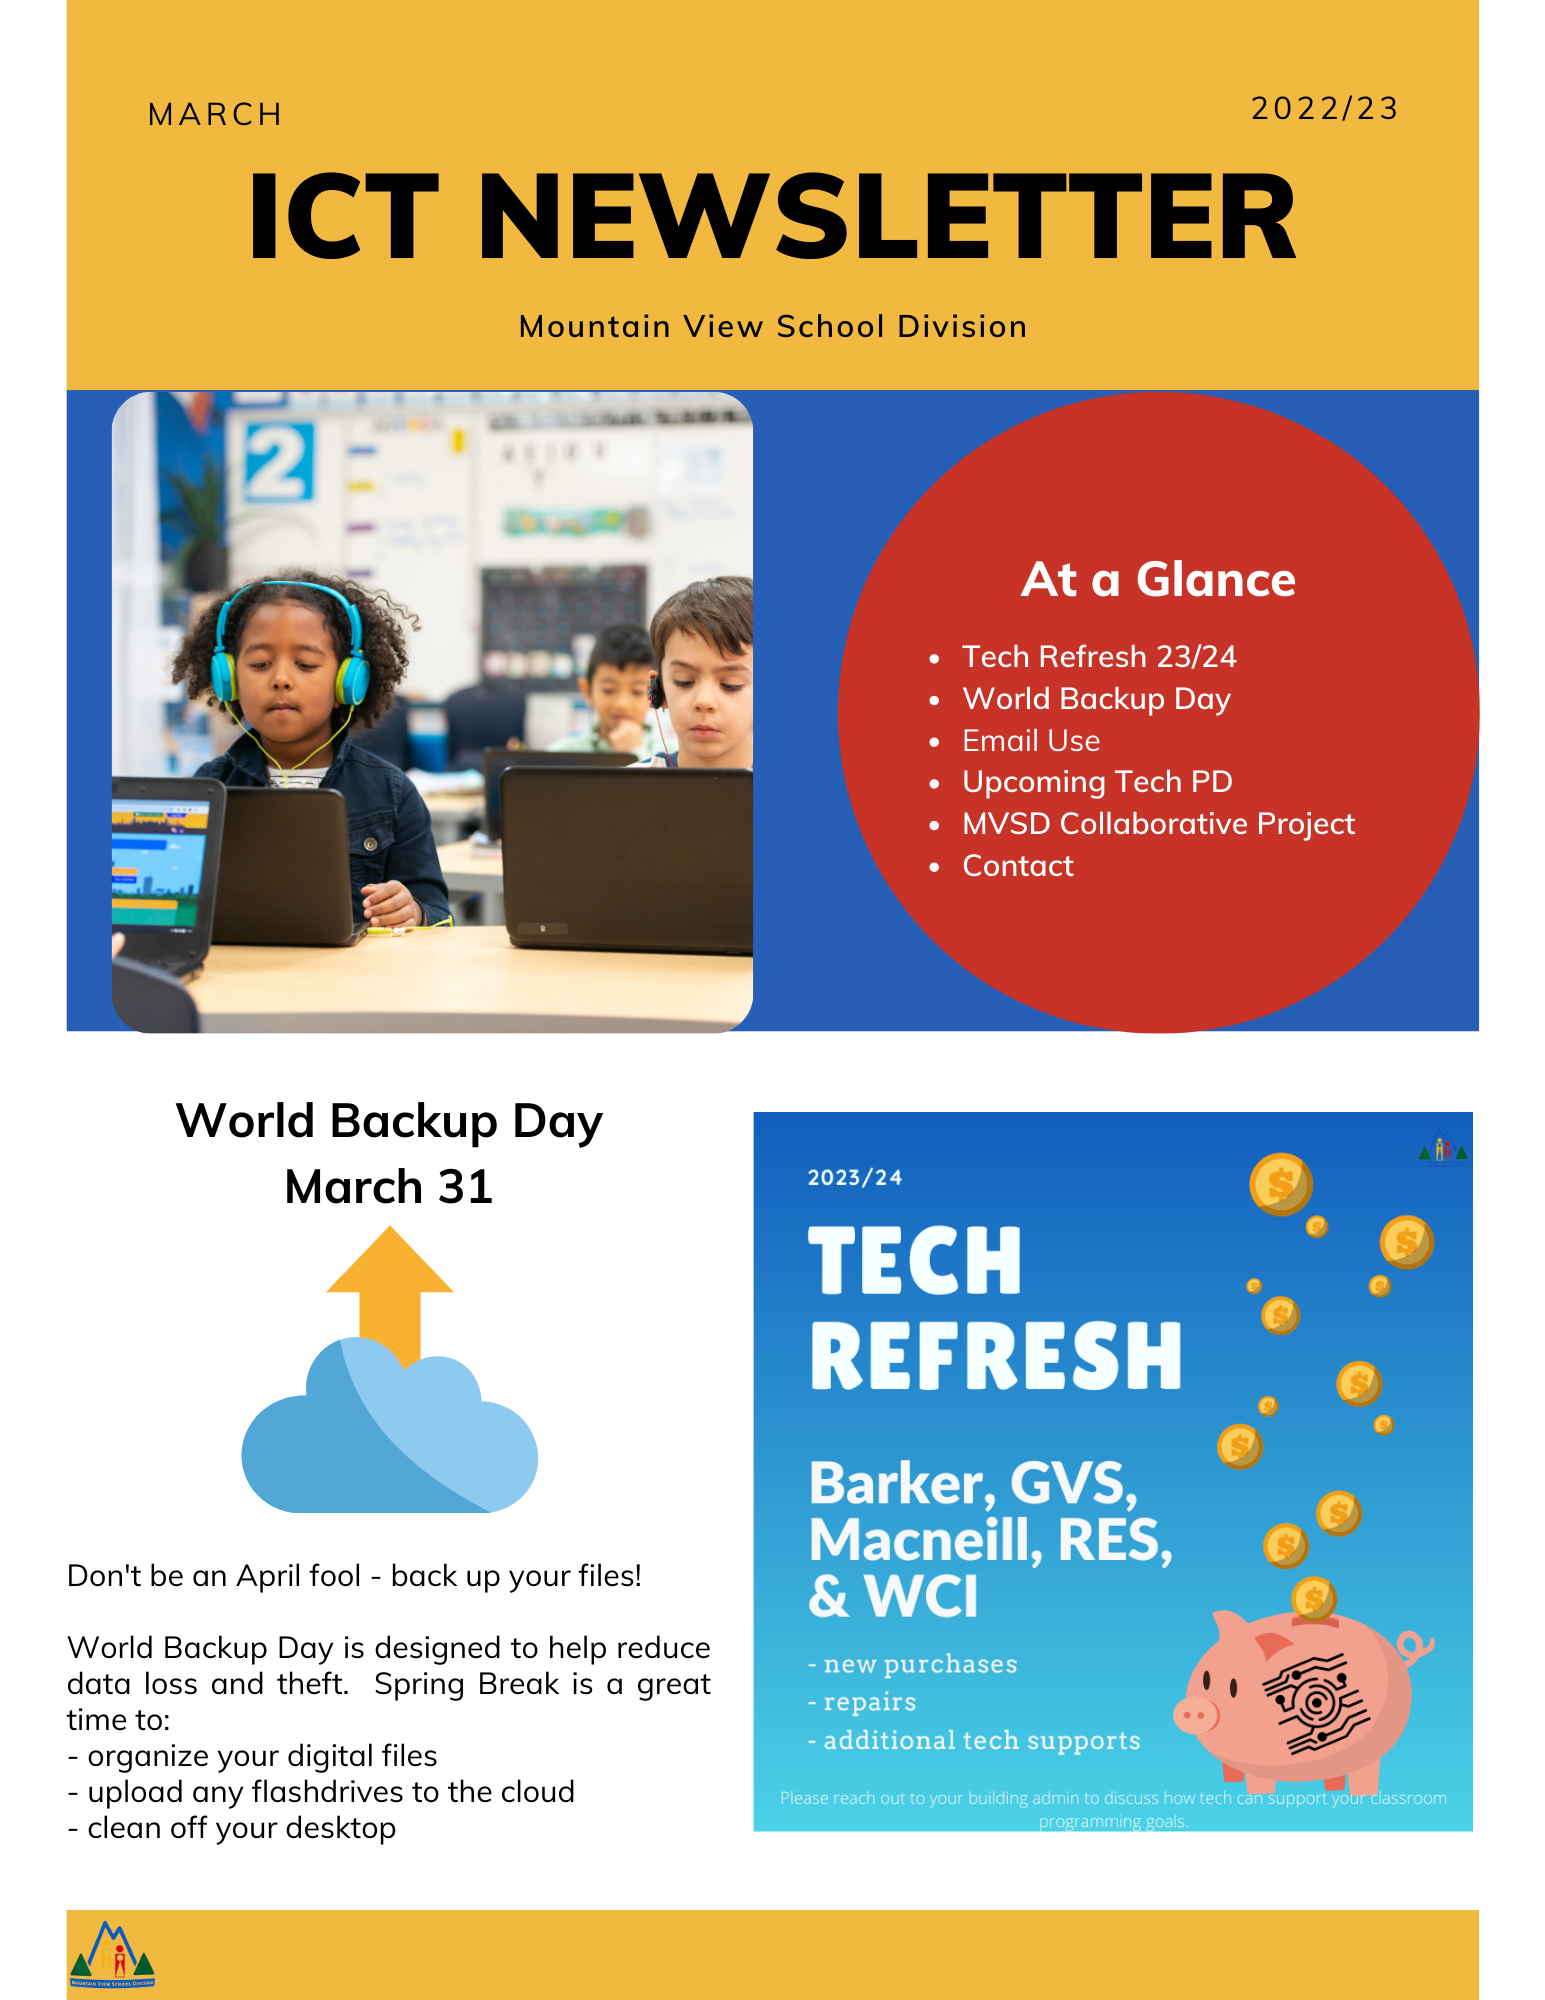 March ICT Newsletter